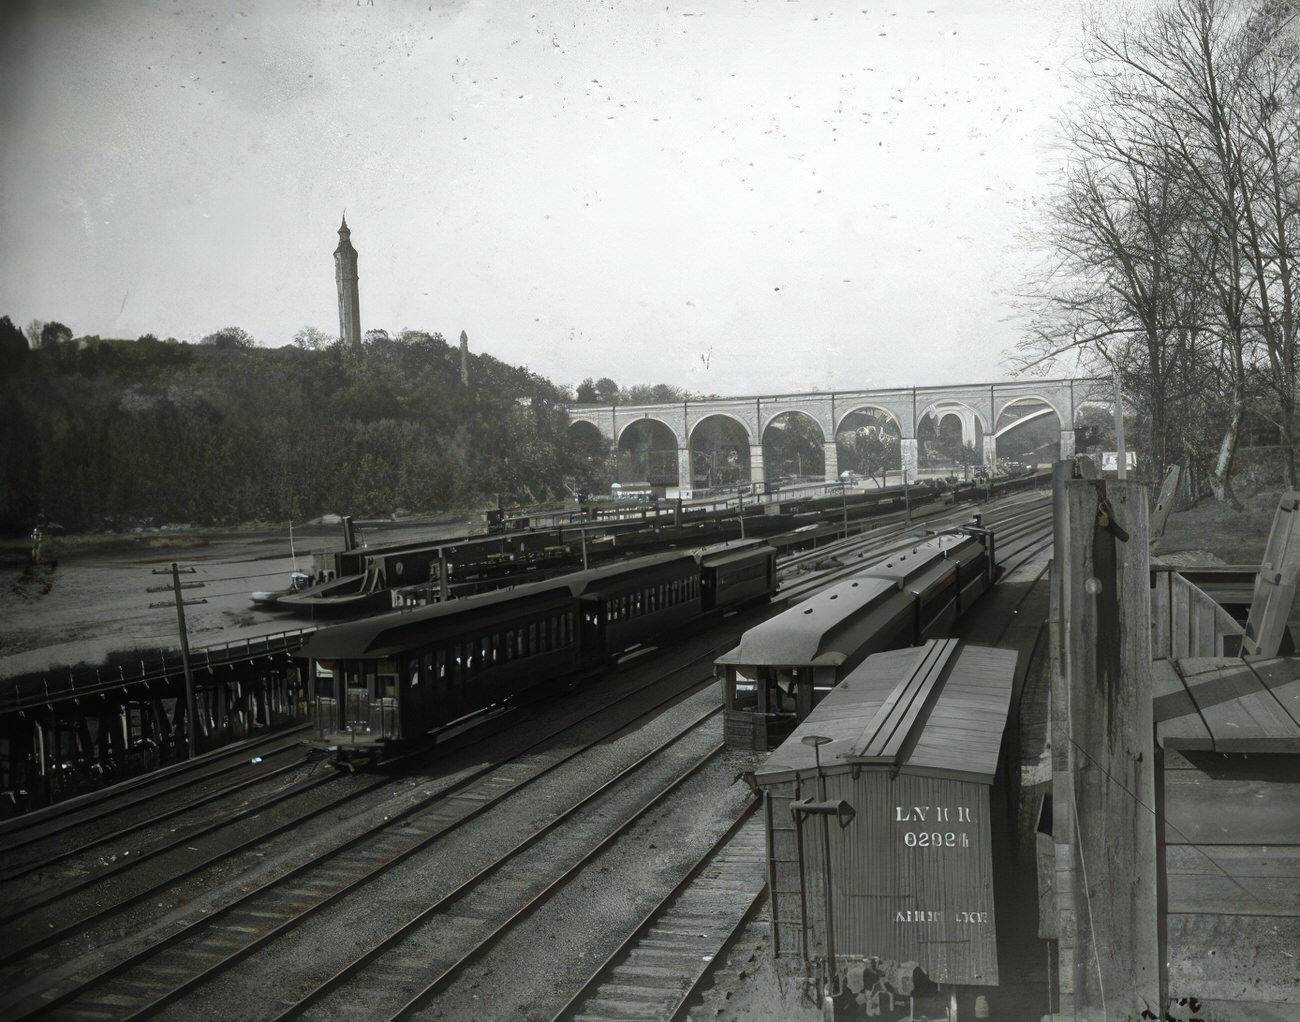 Surroundings Of High Bridge Showing Water Tower And Railroad Tracks, Circa 1910.